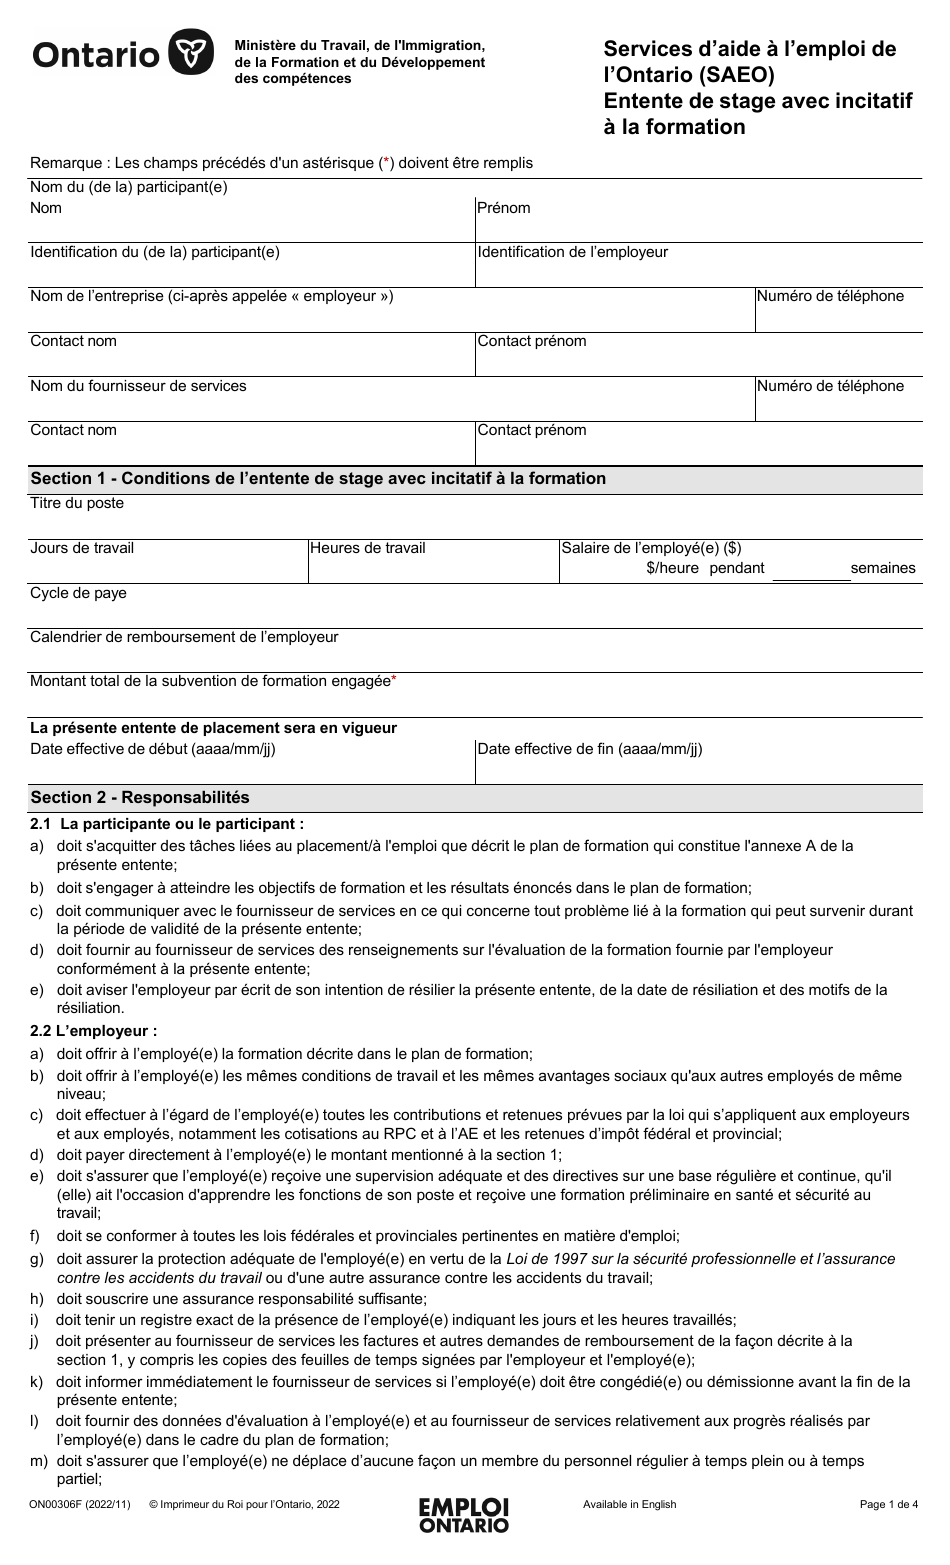 Forme ON00306F Services Daide a Lemploi De Lontario (Saeo) Entente De Stage Avec Incitatif a La Formation - Ontario, Canada (French), Page 1